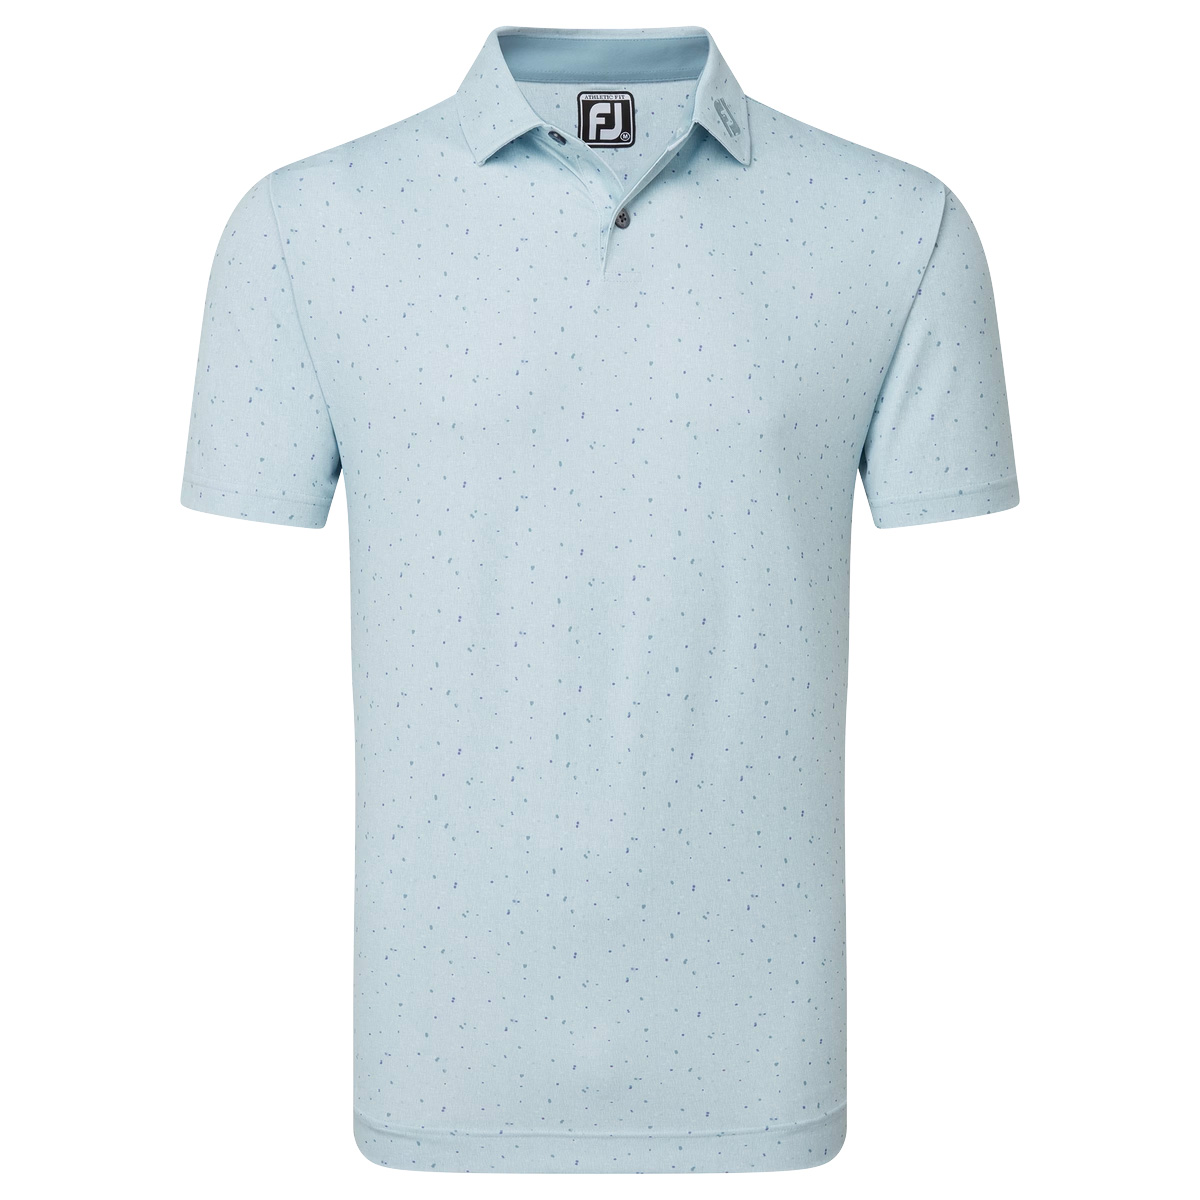 FootJoy EU Tweed Texture Mens Golf Polo Shirt  - Mist